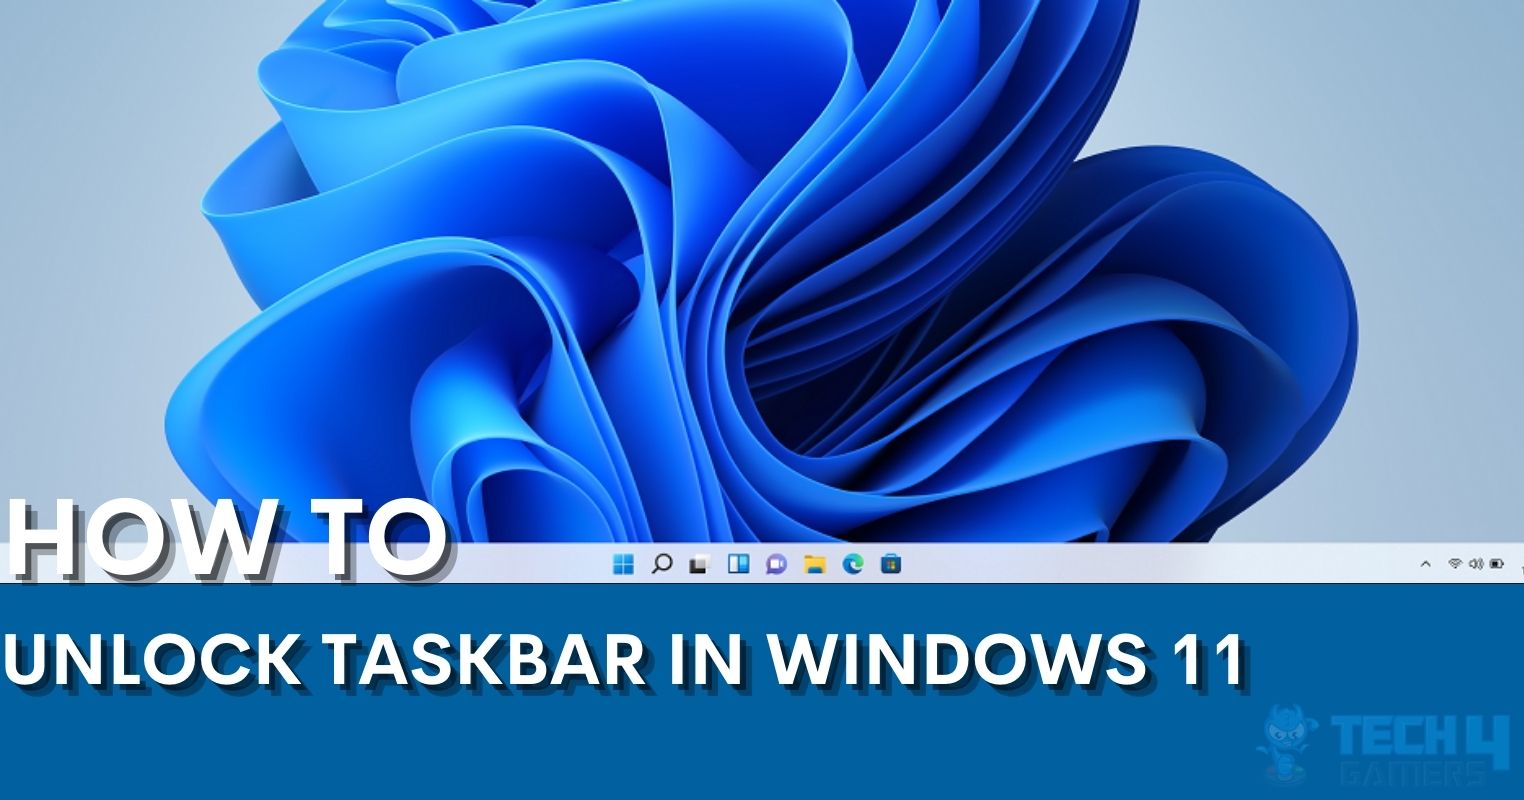 How To Unlock Taskbar In Windows 11? - Tech4Gamers